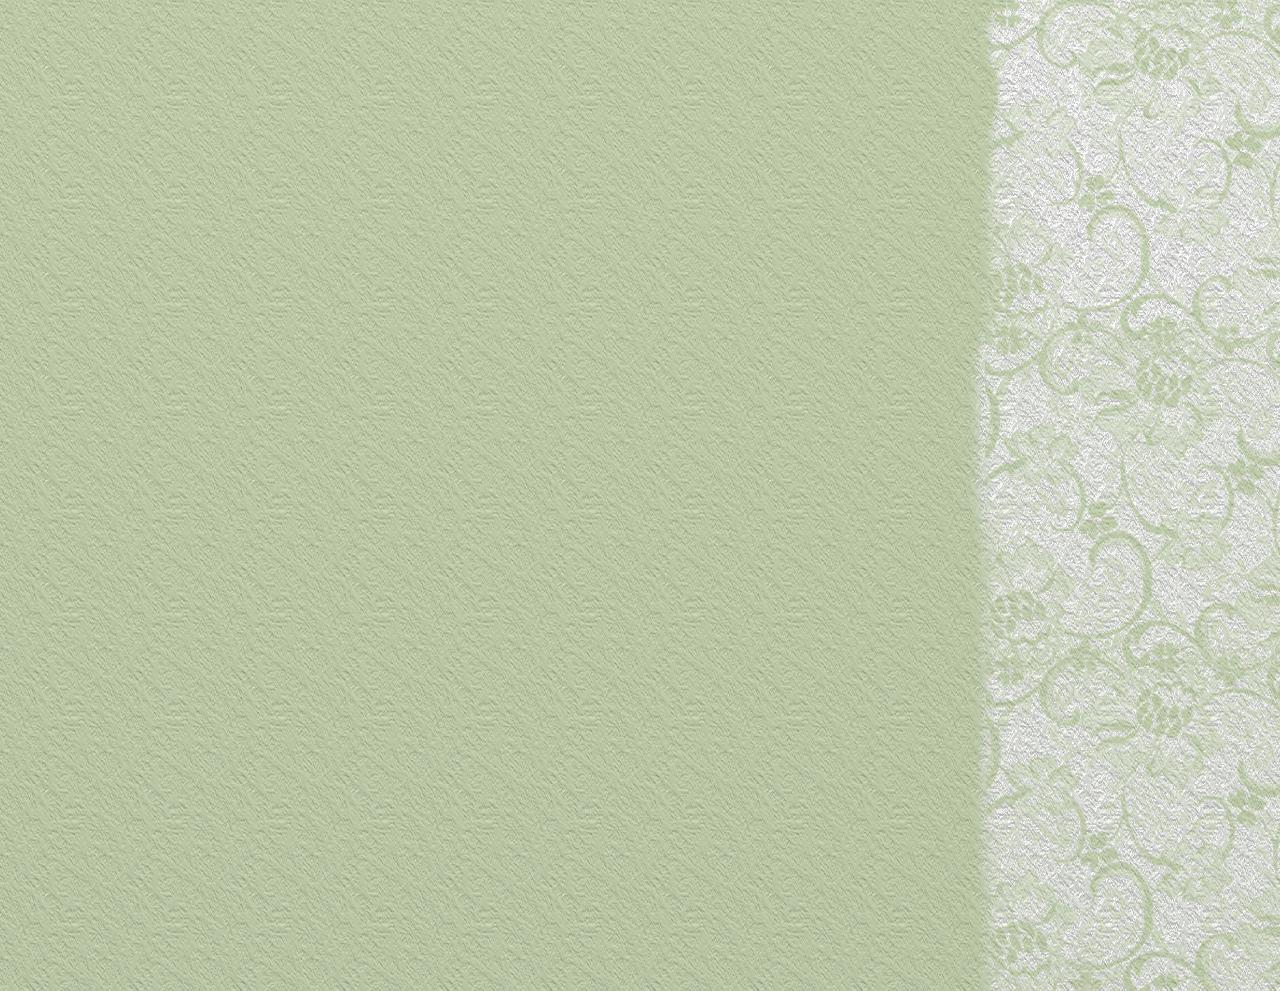 Plain Sage Green HD Sage Green Wallpapers  HD Wallpapers  ID 83421